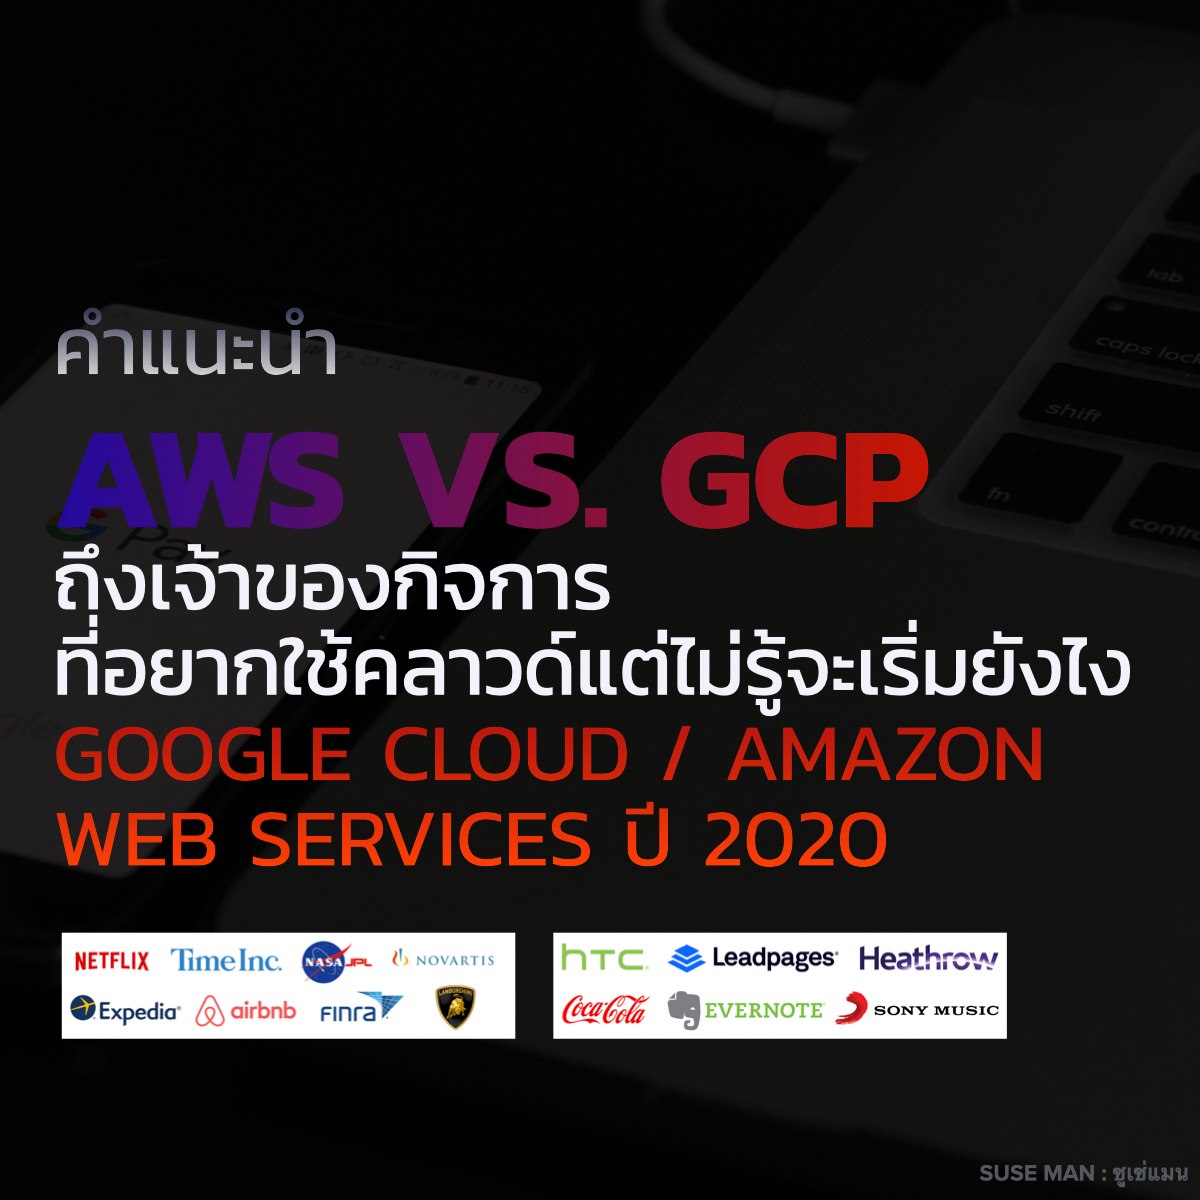 Cloud ใช้ก่อน จ่ายทีหลัง (GCP vs. AWS)